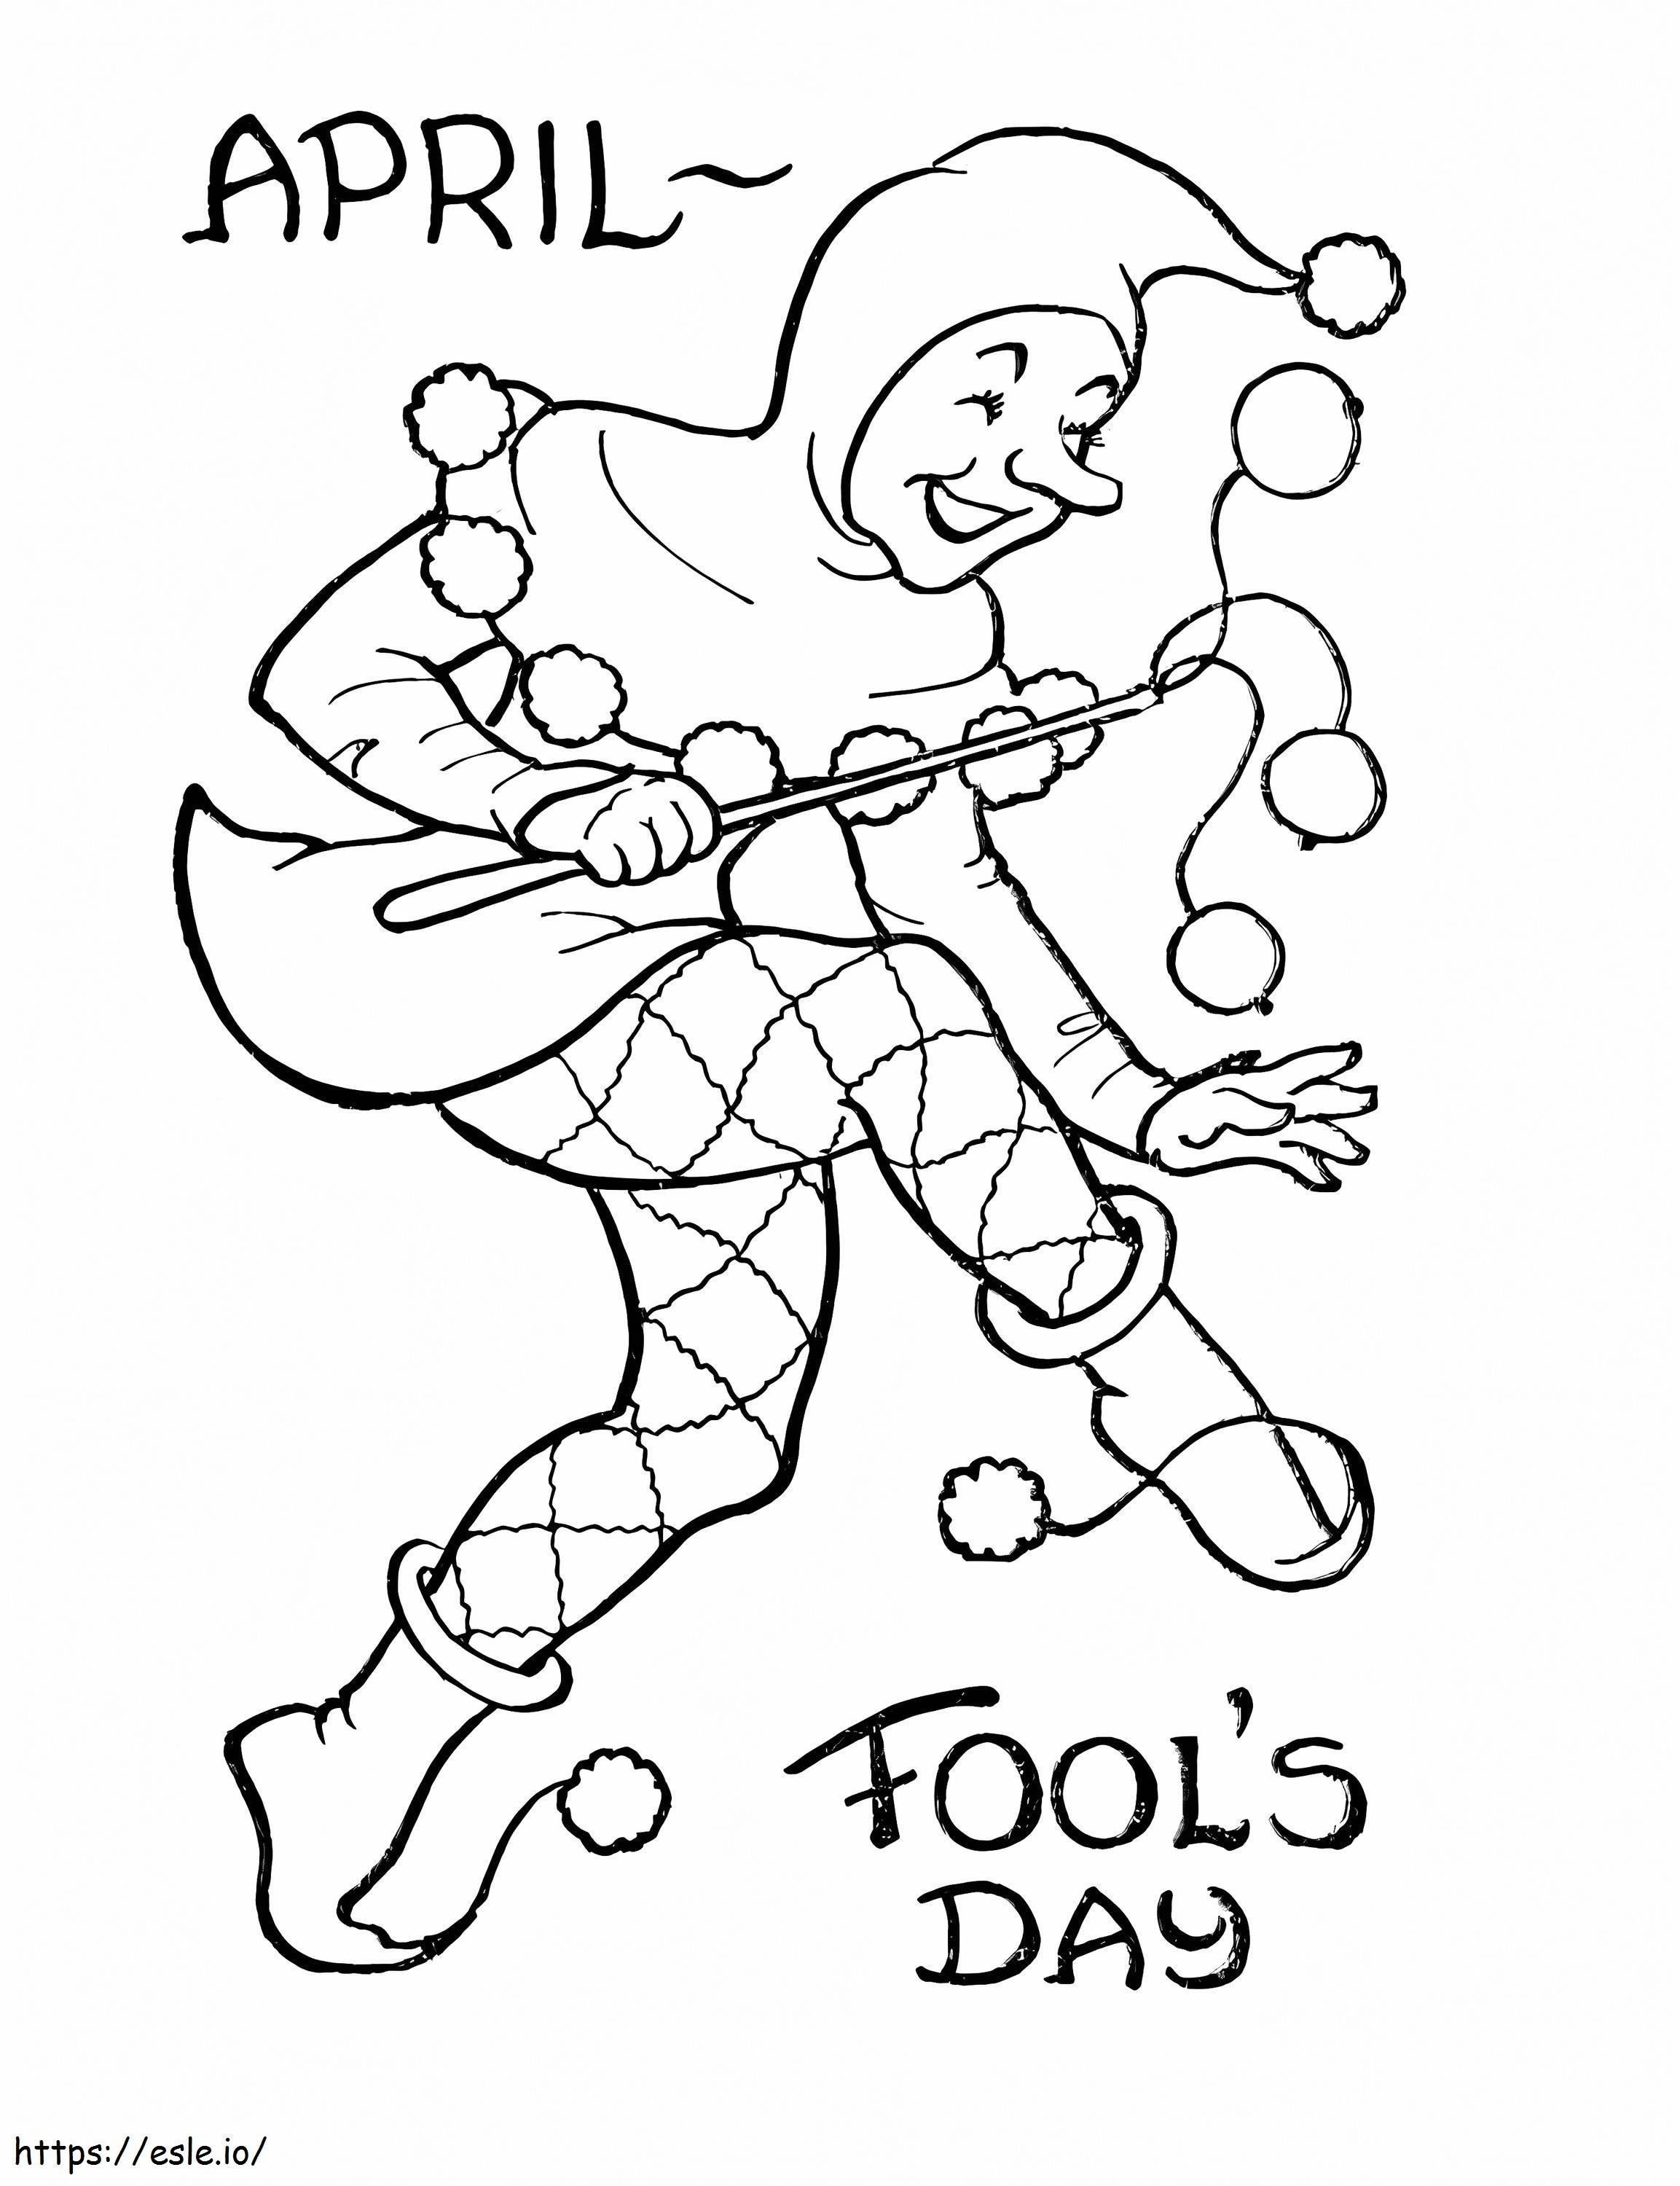 Happy April Fools Day coloring page